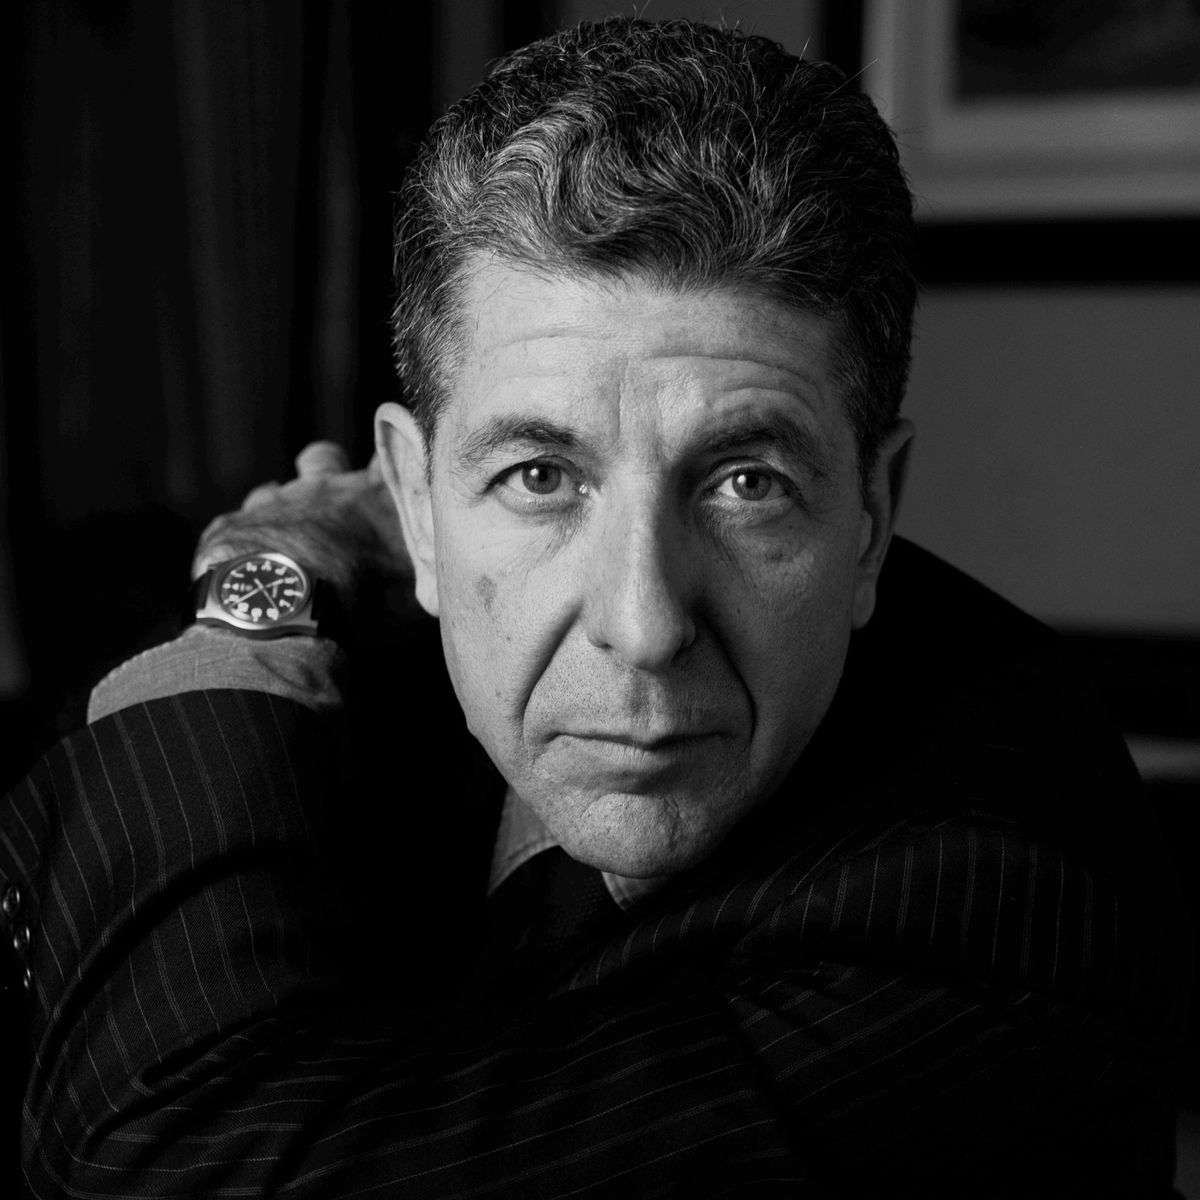 Leonard Cohen photo via Getty Images